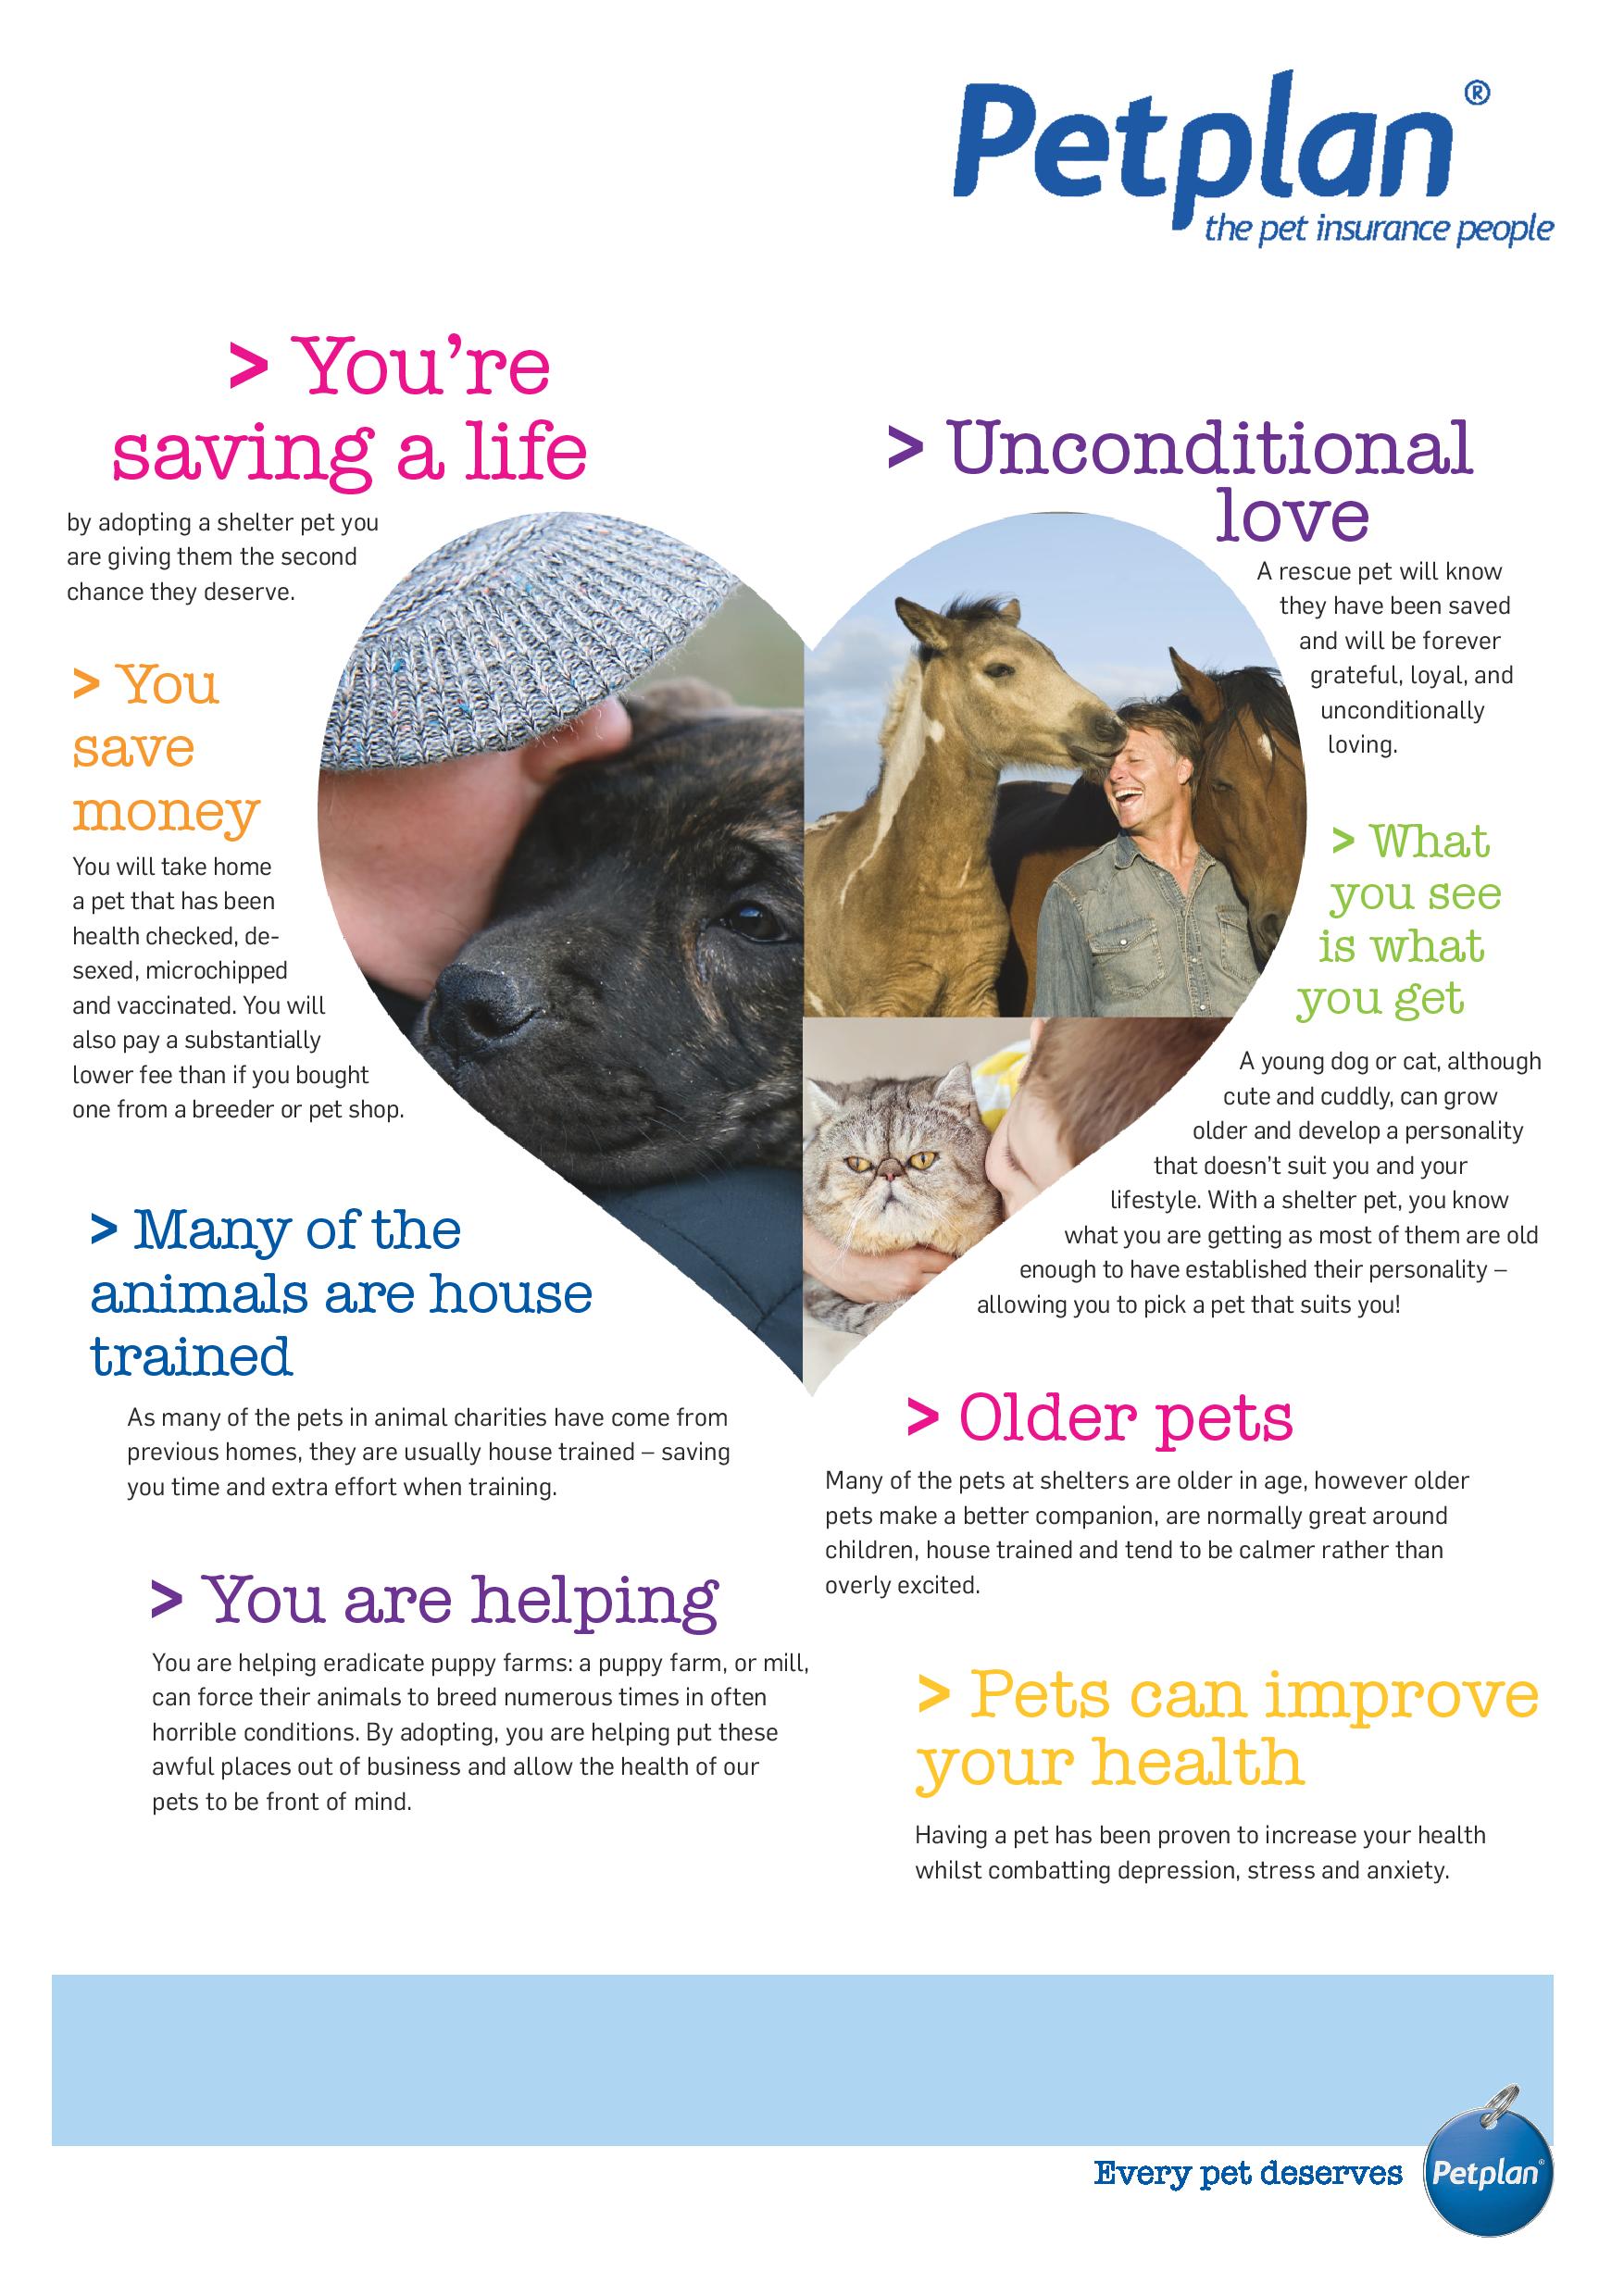 Pet Adoption Benefits | Petplan Blog